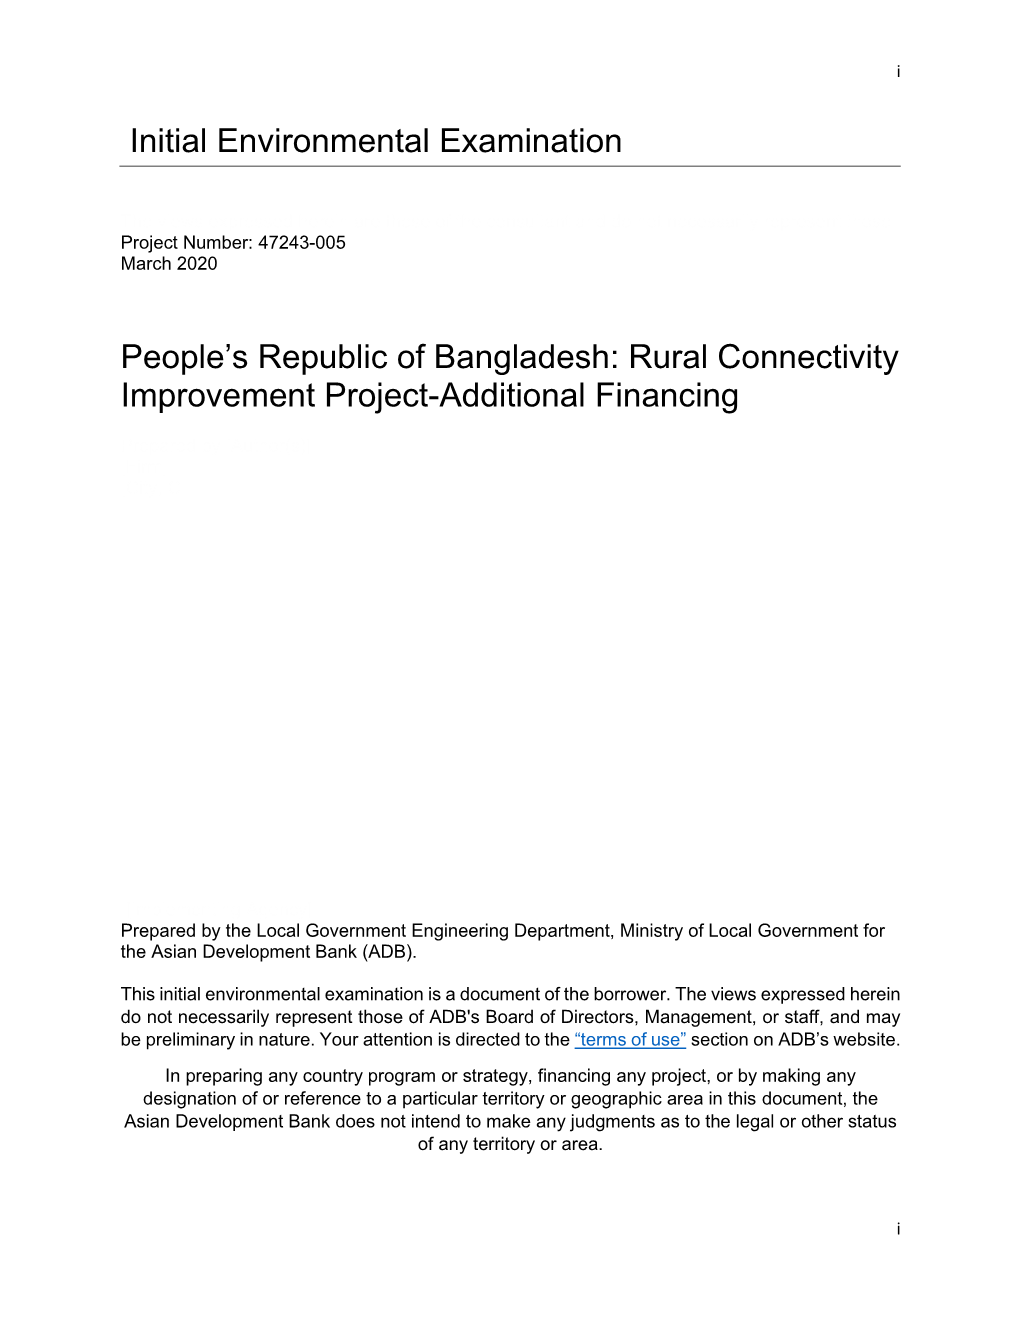 47243-005: Rural Connectivity Improvement Project